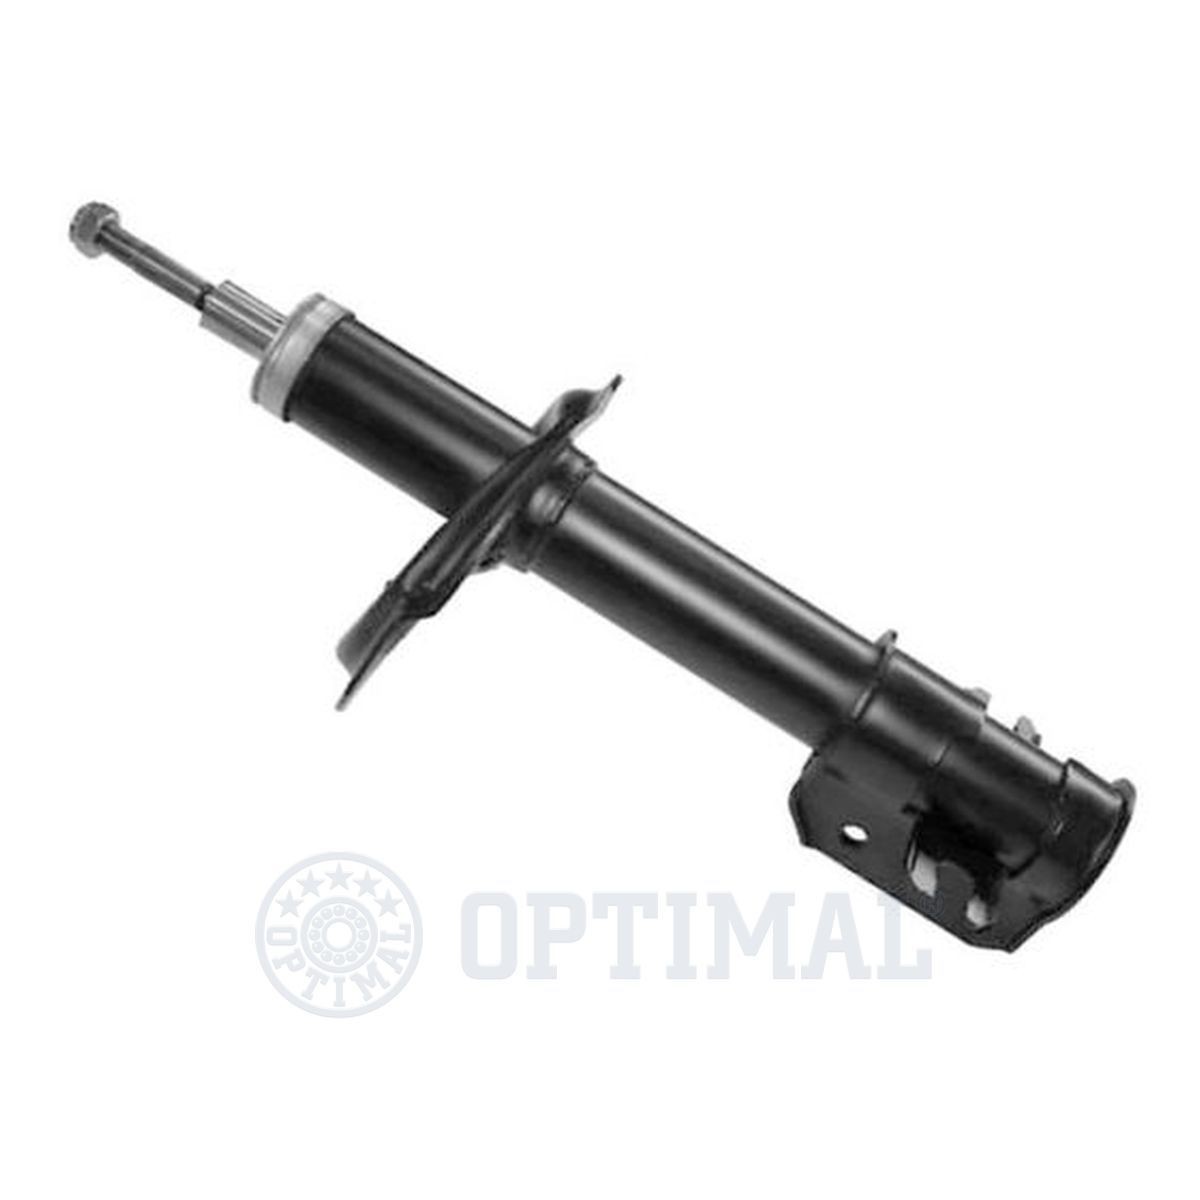 OPTIMAL Front Axle, Gas Pressure, Twin-Tube, Suspension Strut, Spring-bearing Damper, Top pin, Bottom Clamp Shocks A-3011G buy